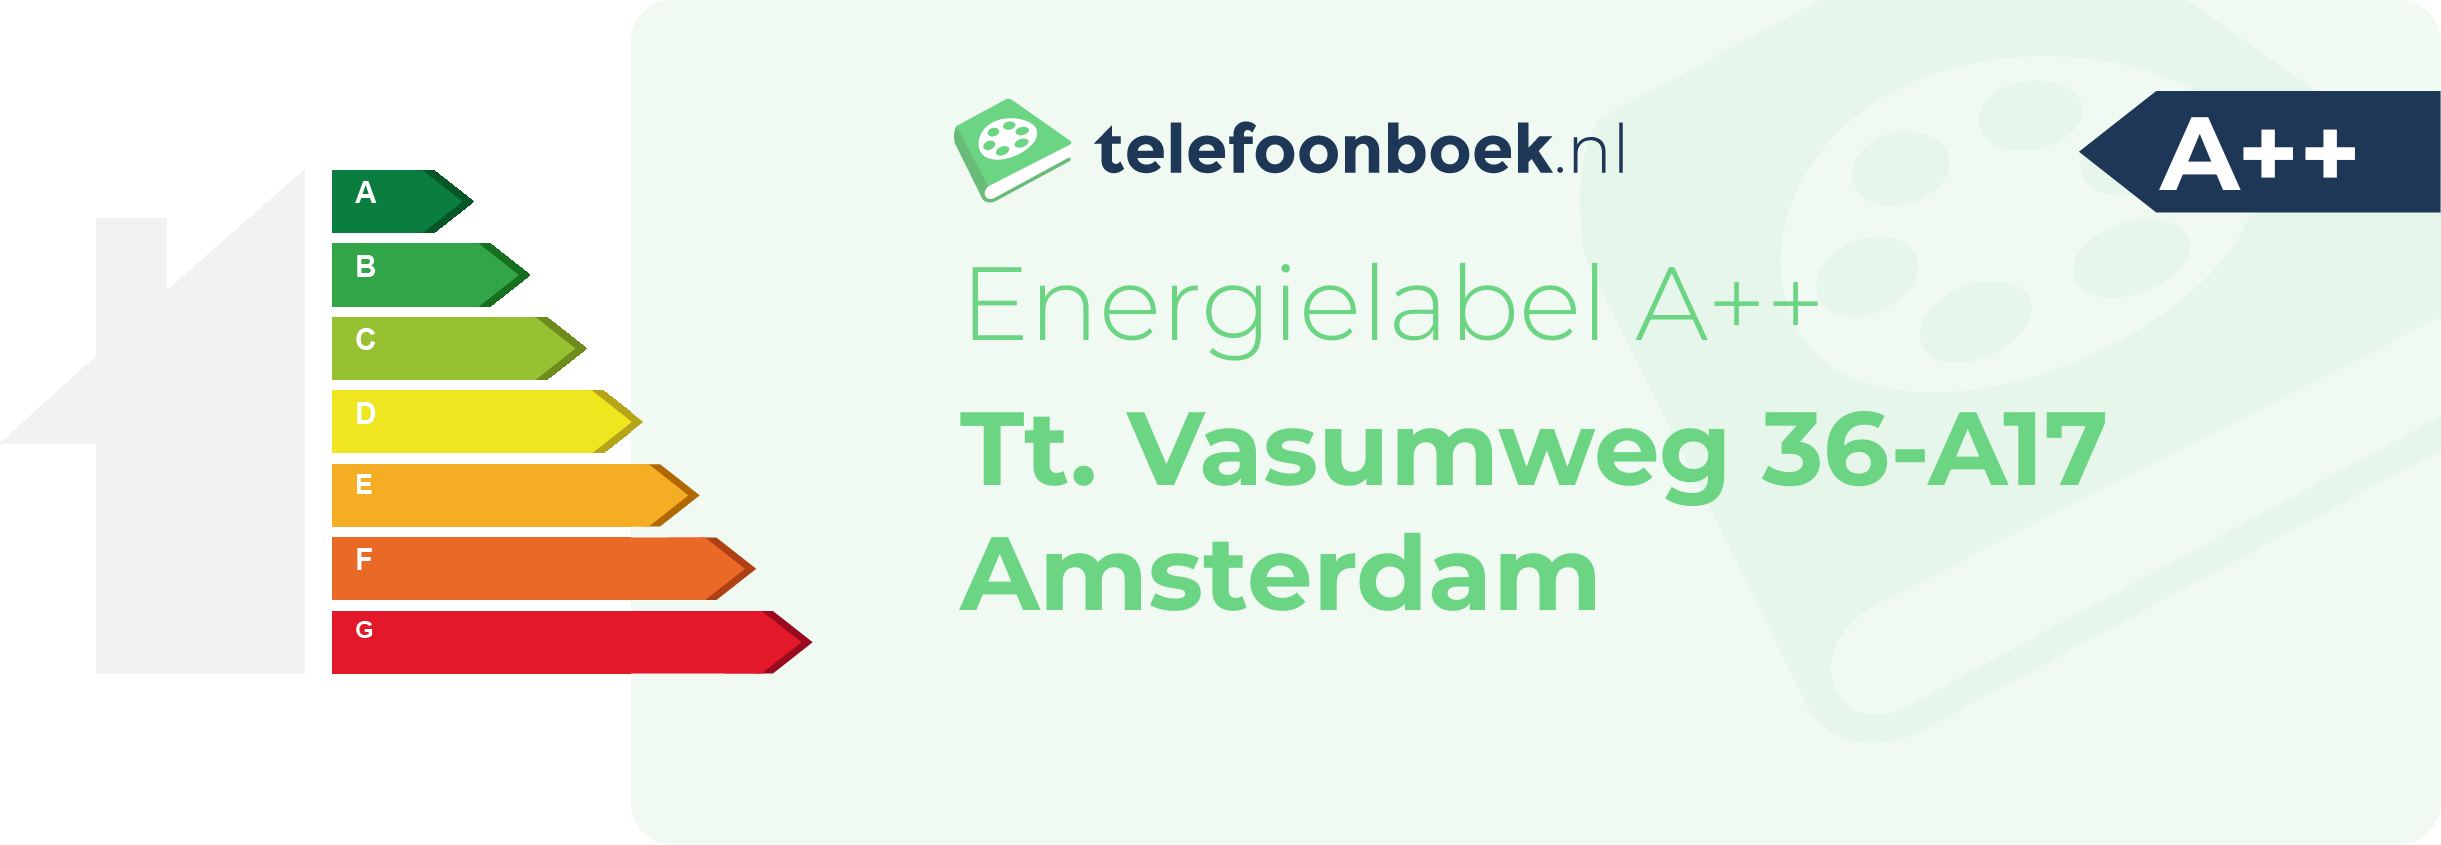 Energielabel Tt. Vasumweg 36-A17 Amsterdam